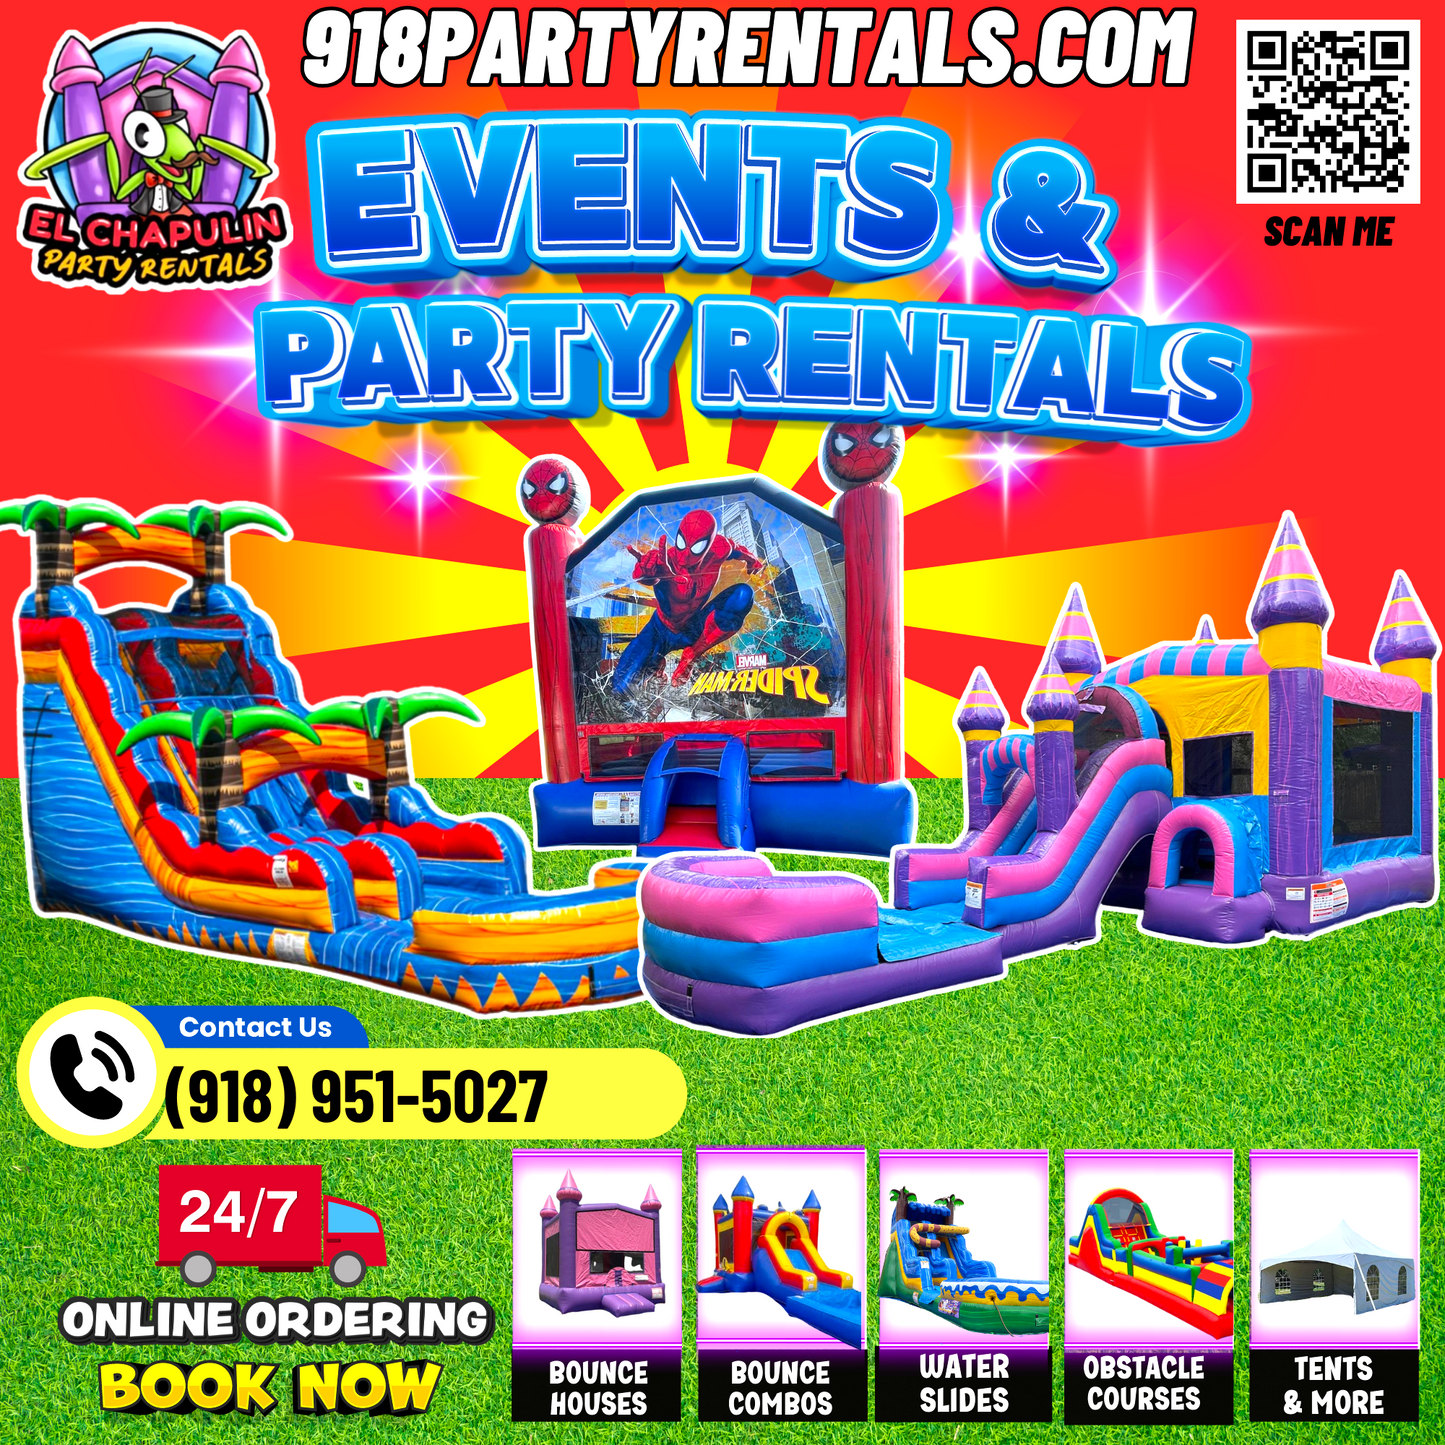 Party Rental Multi Unit Website Graphic